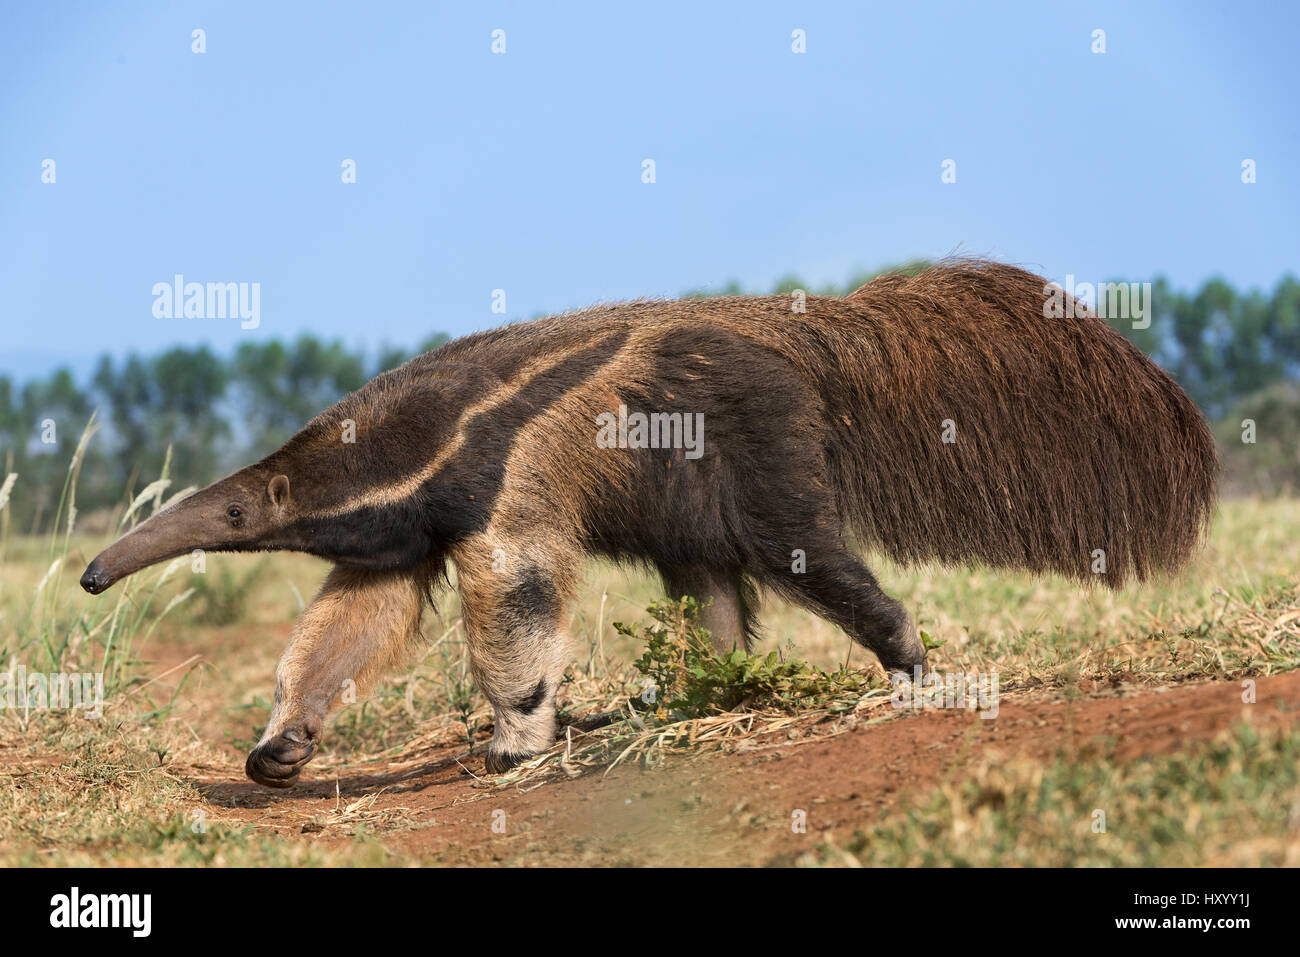 Adulto Anteater gigante (Myrmecophaga tridactyla) foraggio. Pantanal meridionale, Moto Grosso do Sul membro, Brasile. Settembre. Foto Stock